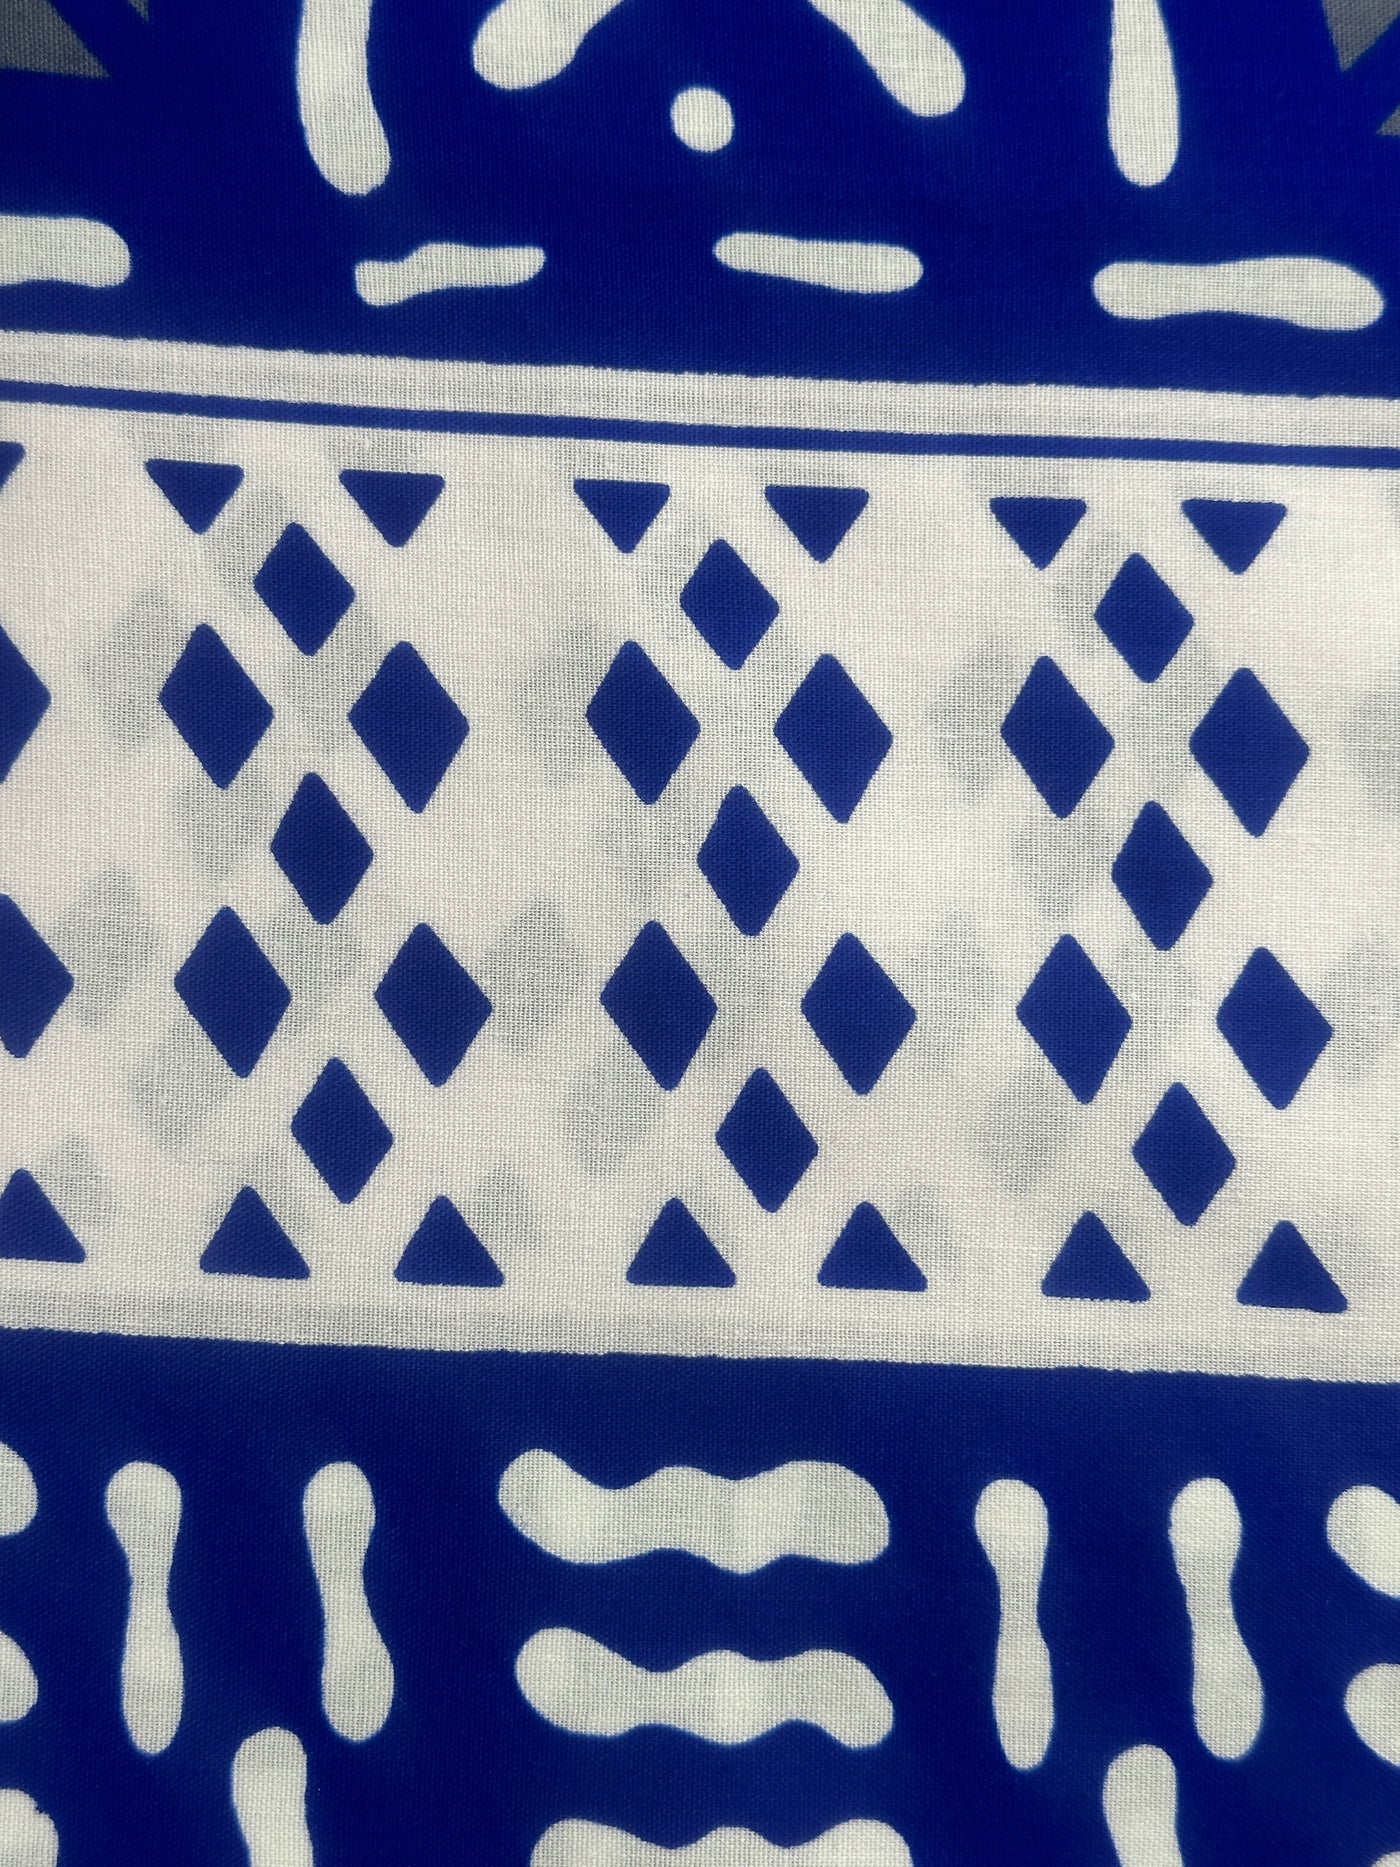 Tribal Fabric - 269519